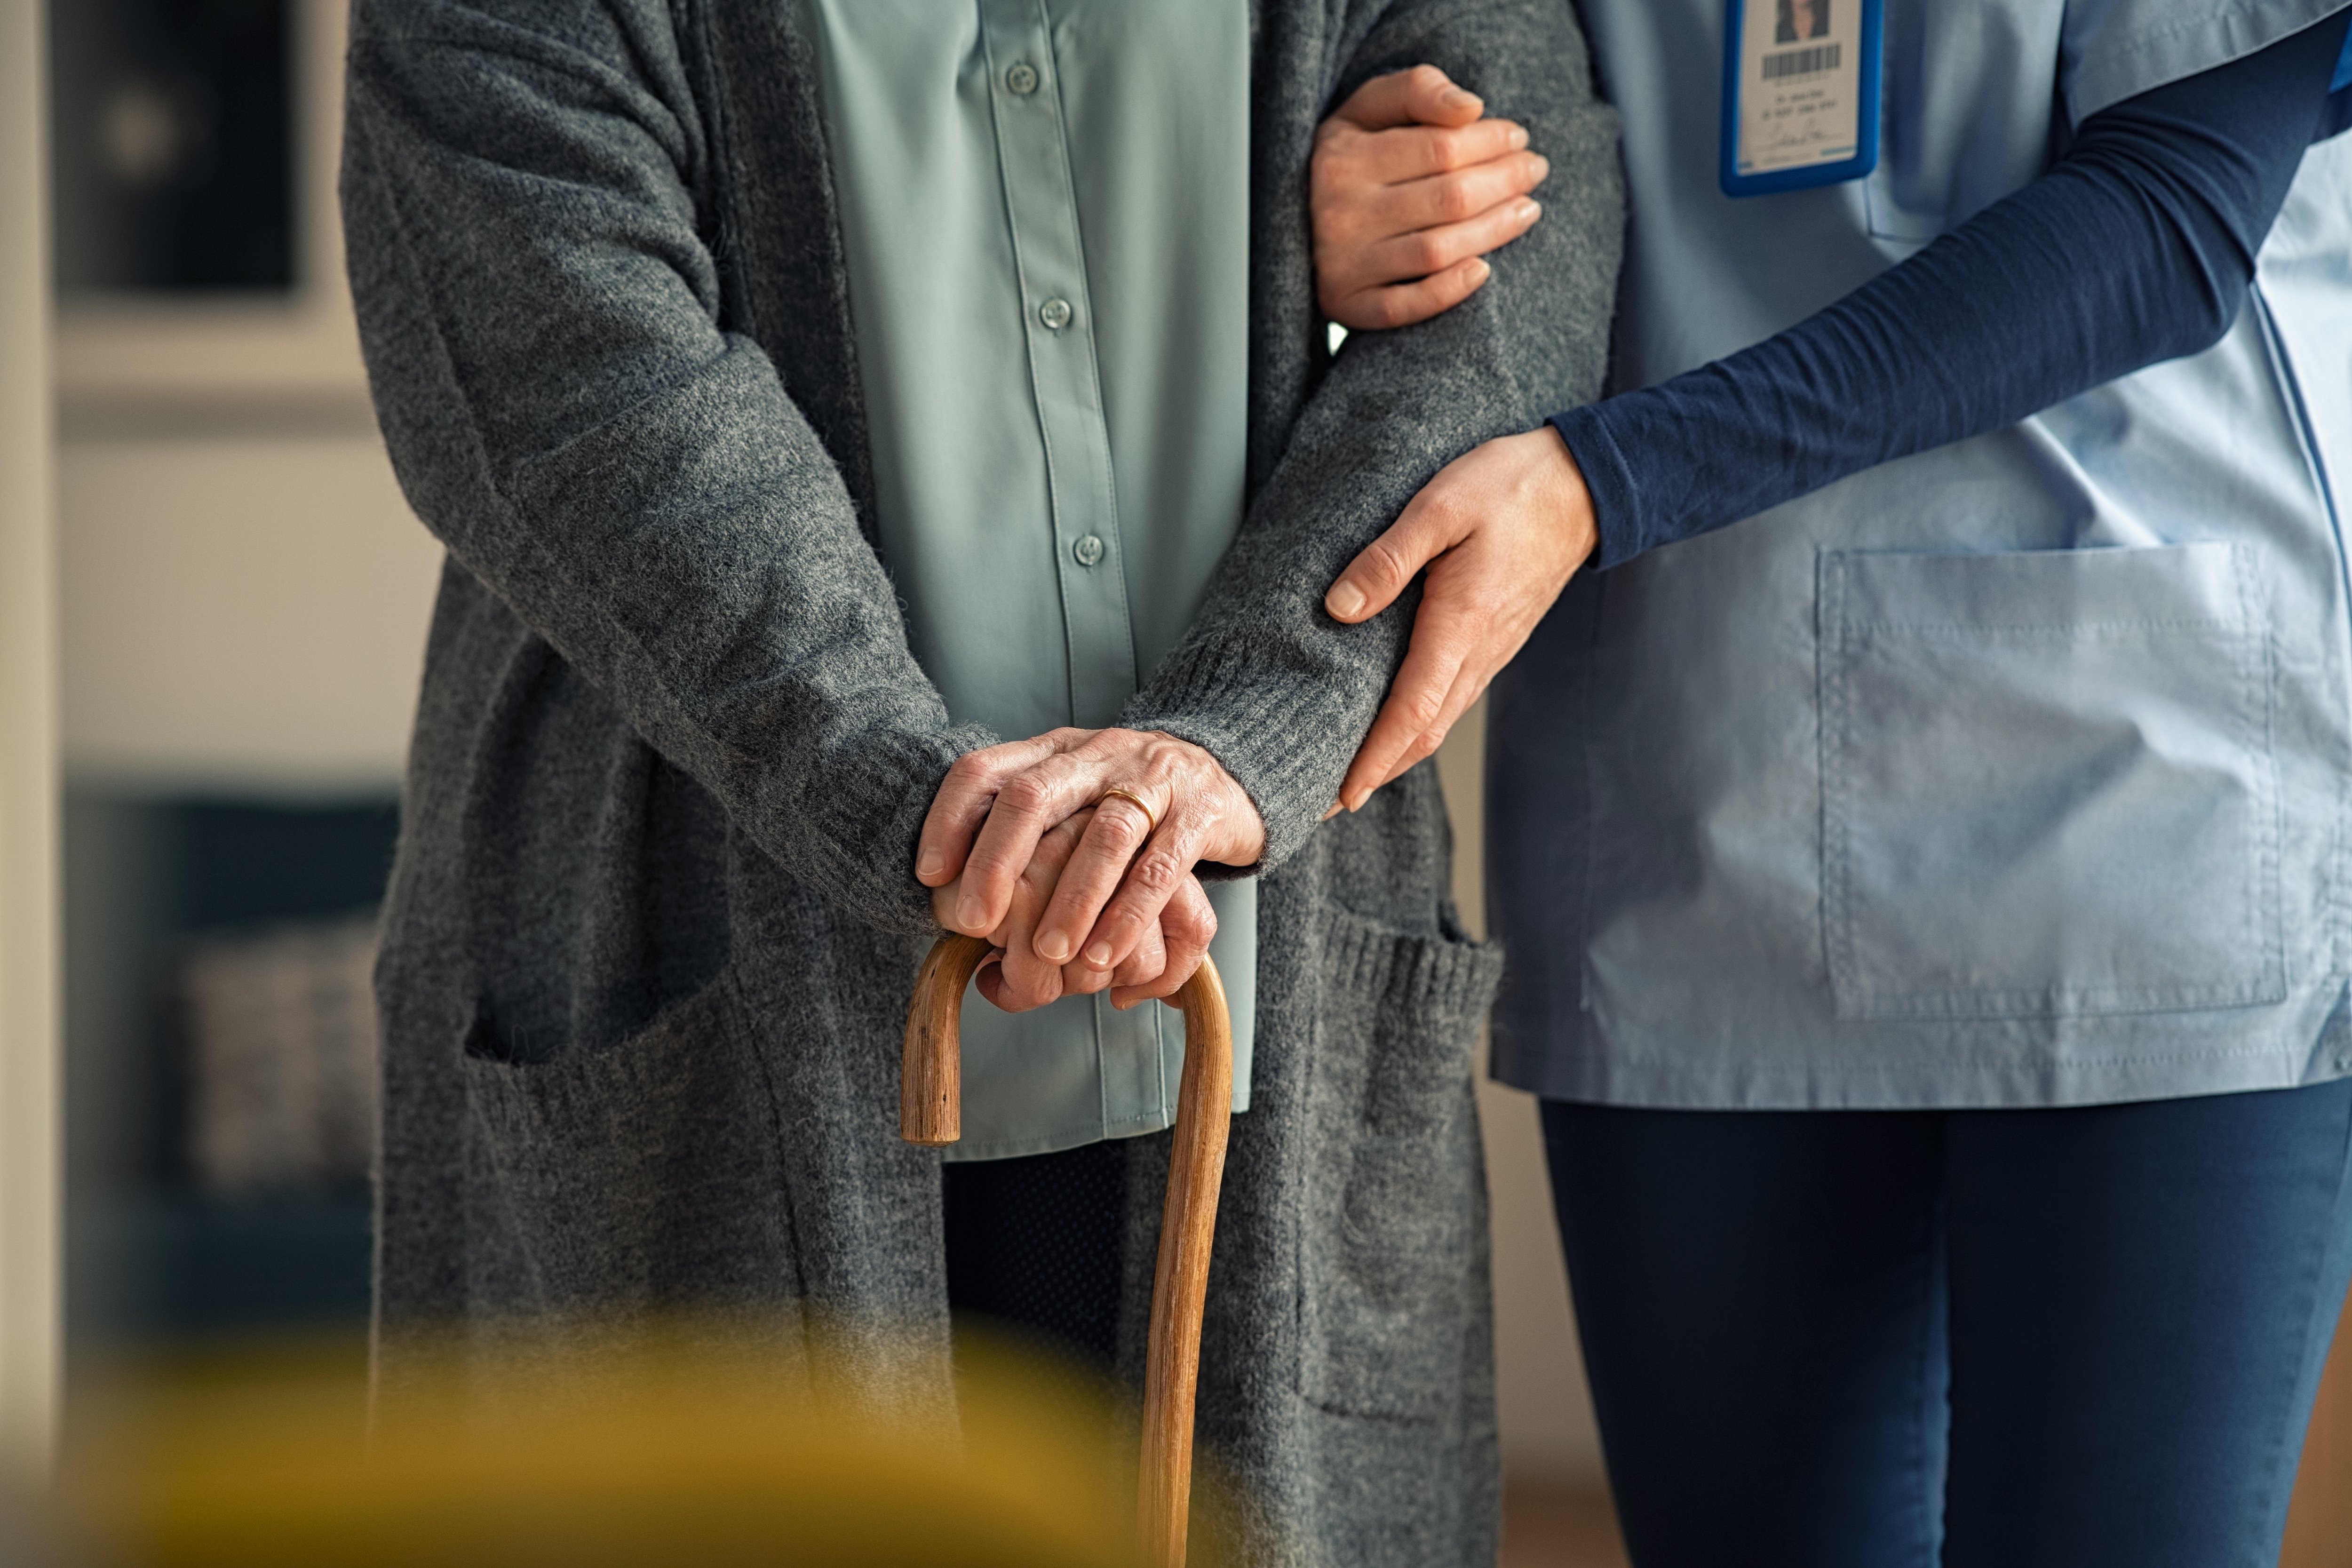 A medical staff member assists an older woman. | Source: Shutterstock